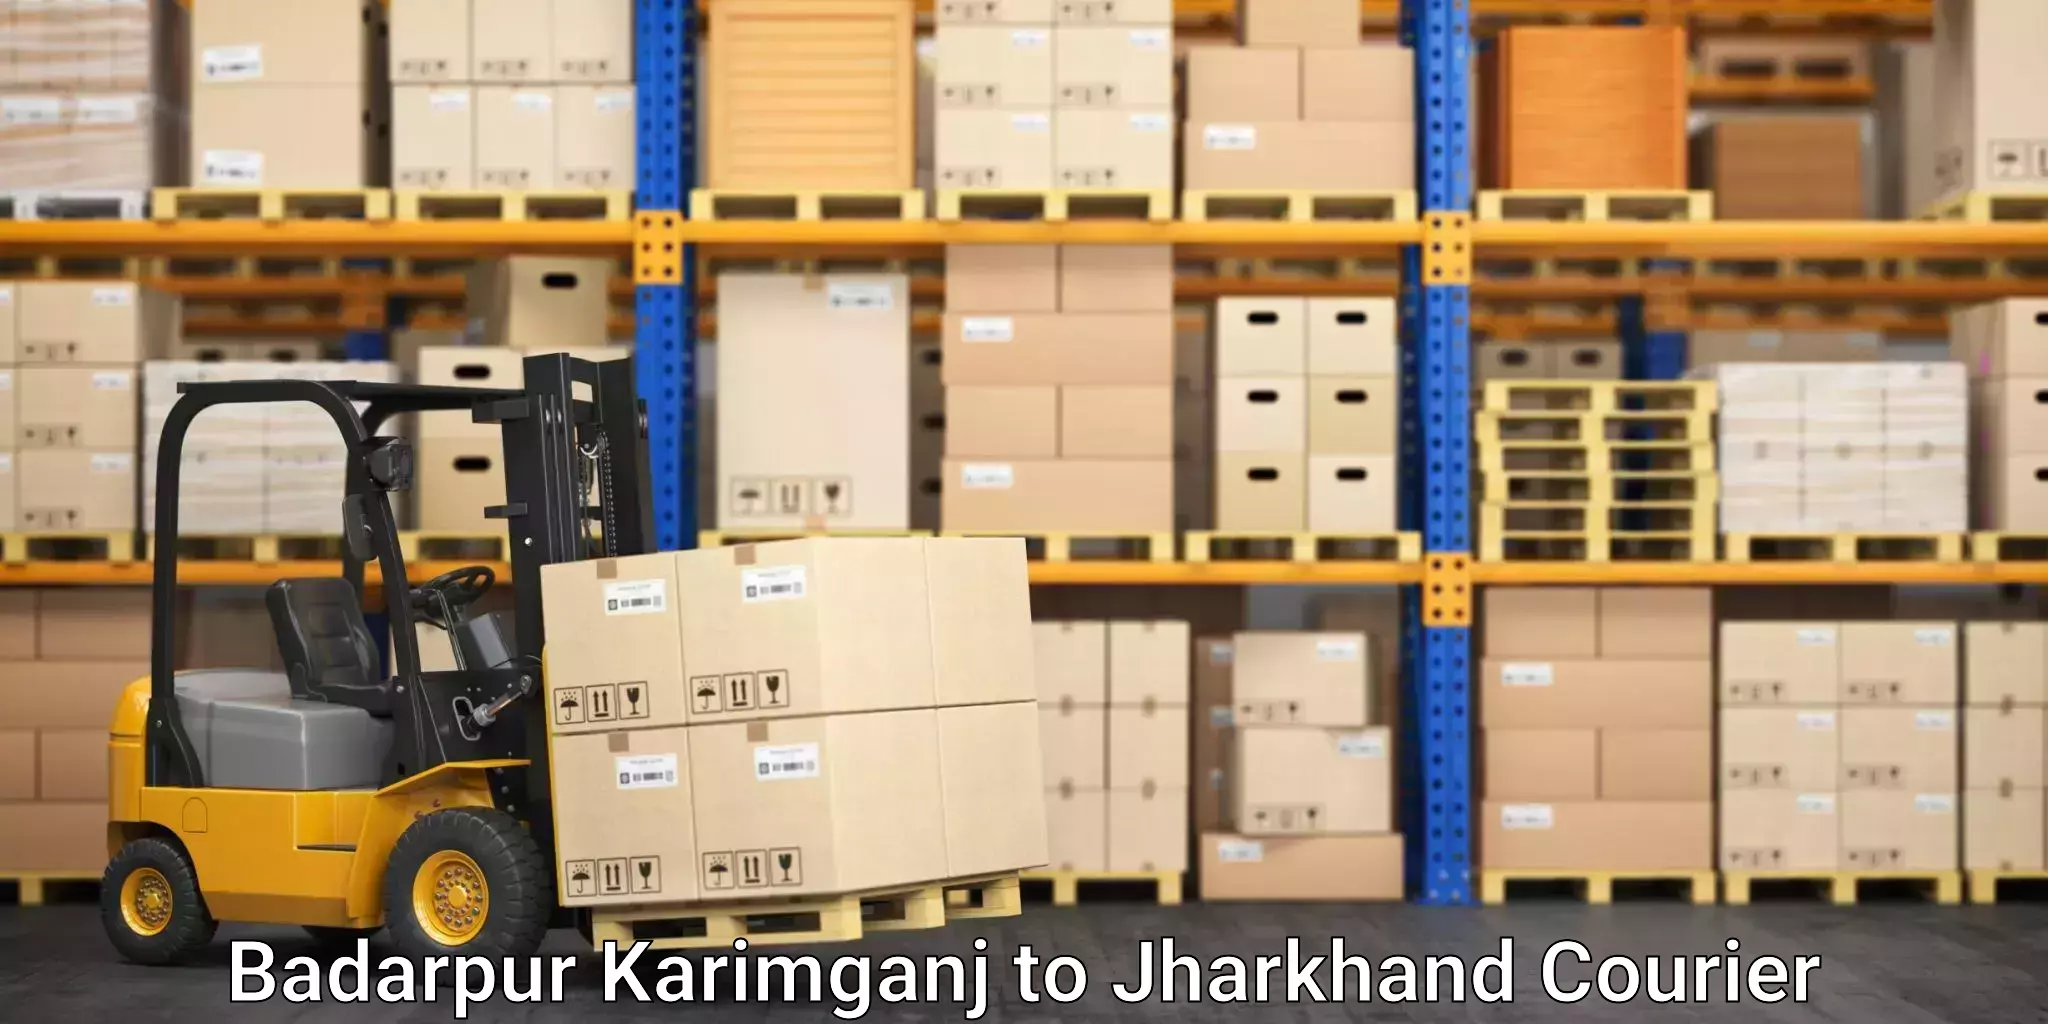 Courier service booking Badarpur Karimganj to Jharkhand